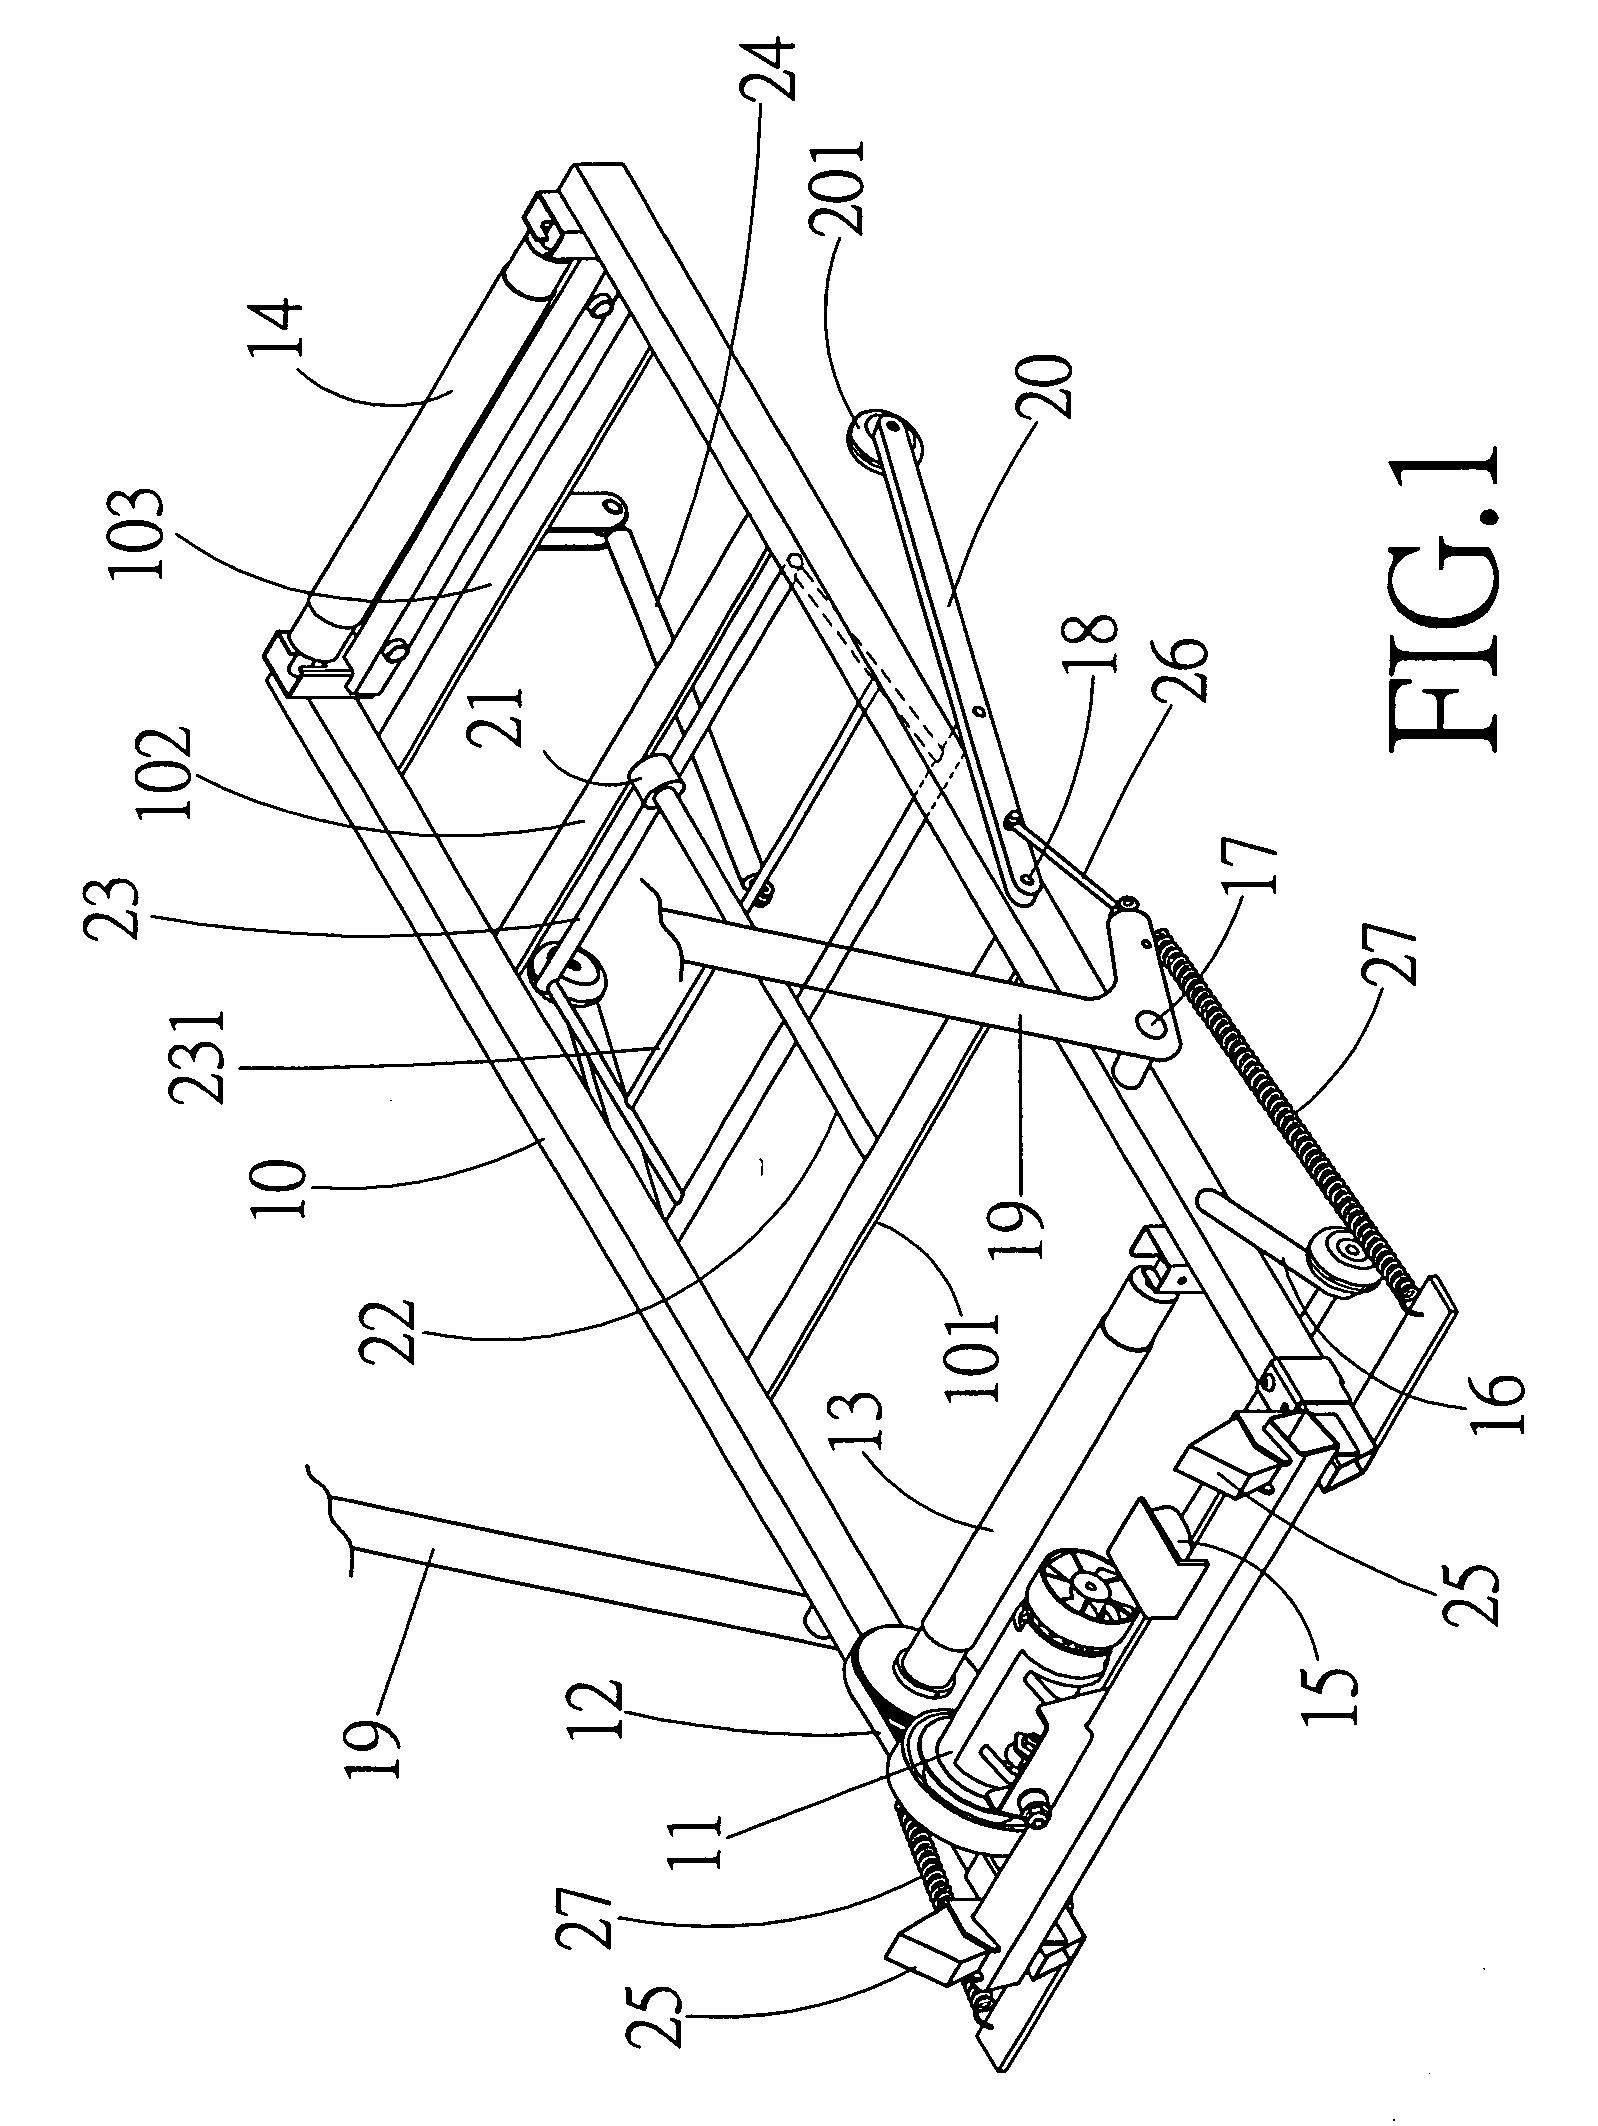 Integrated folding mechanism of a treadmill